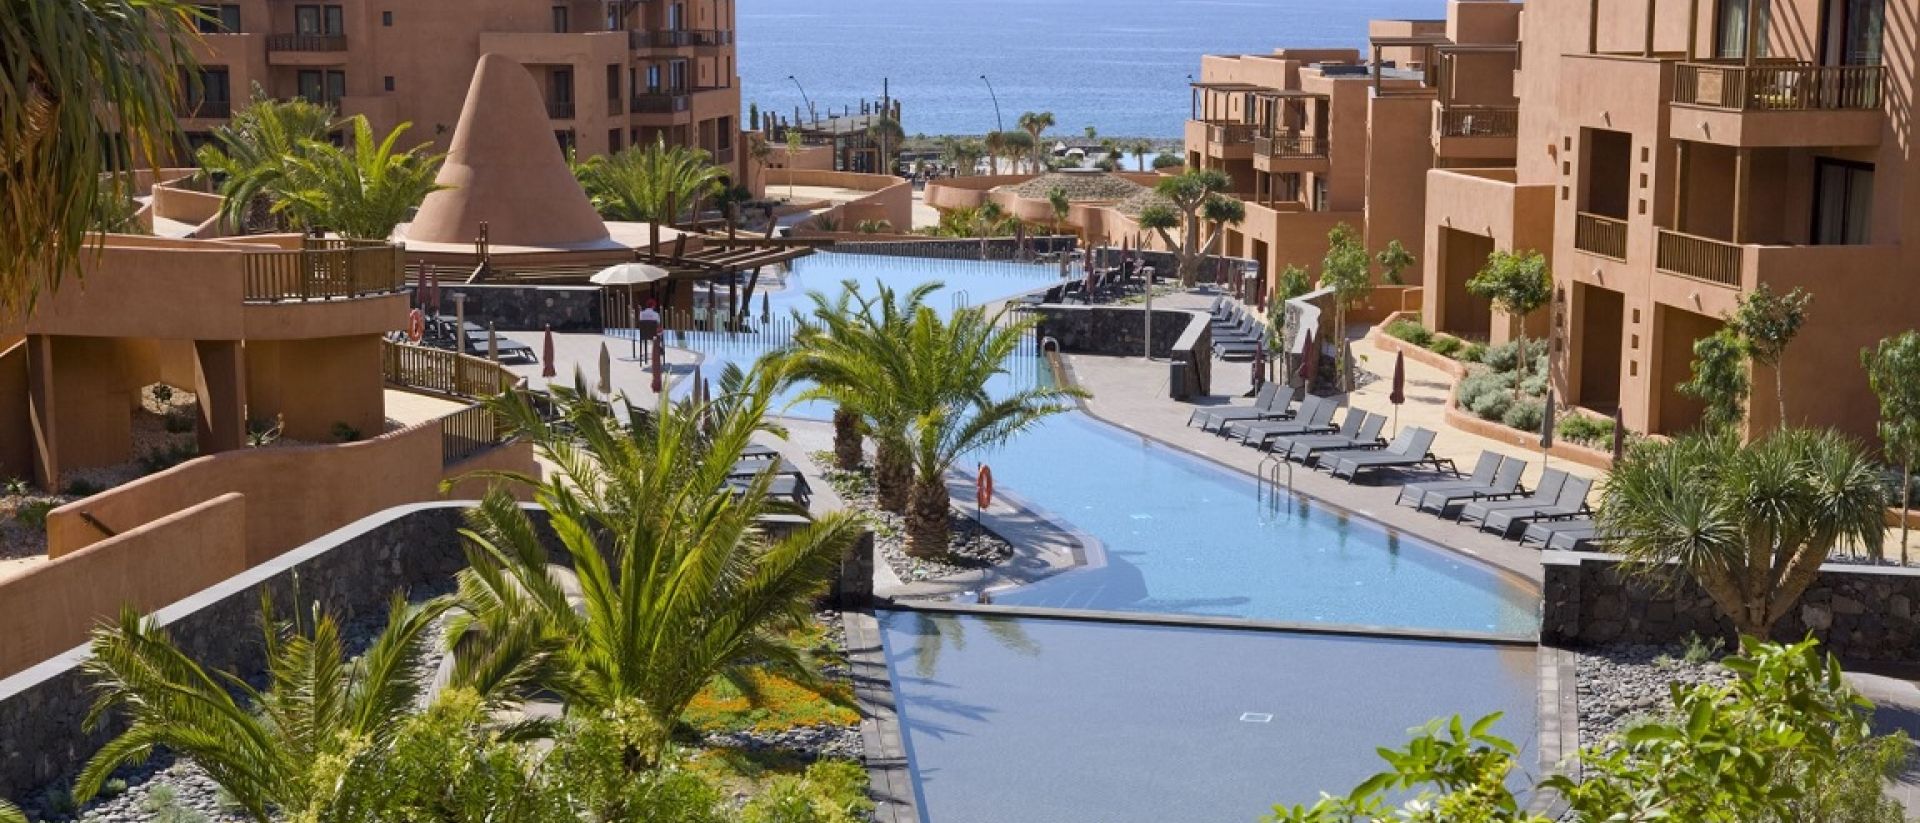 Barceló Hotel Group inaugura el Barceló Tenerife | Expreso